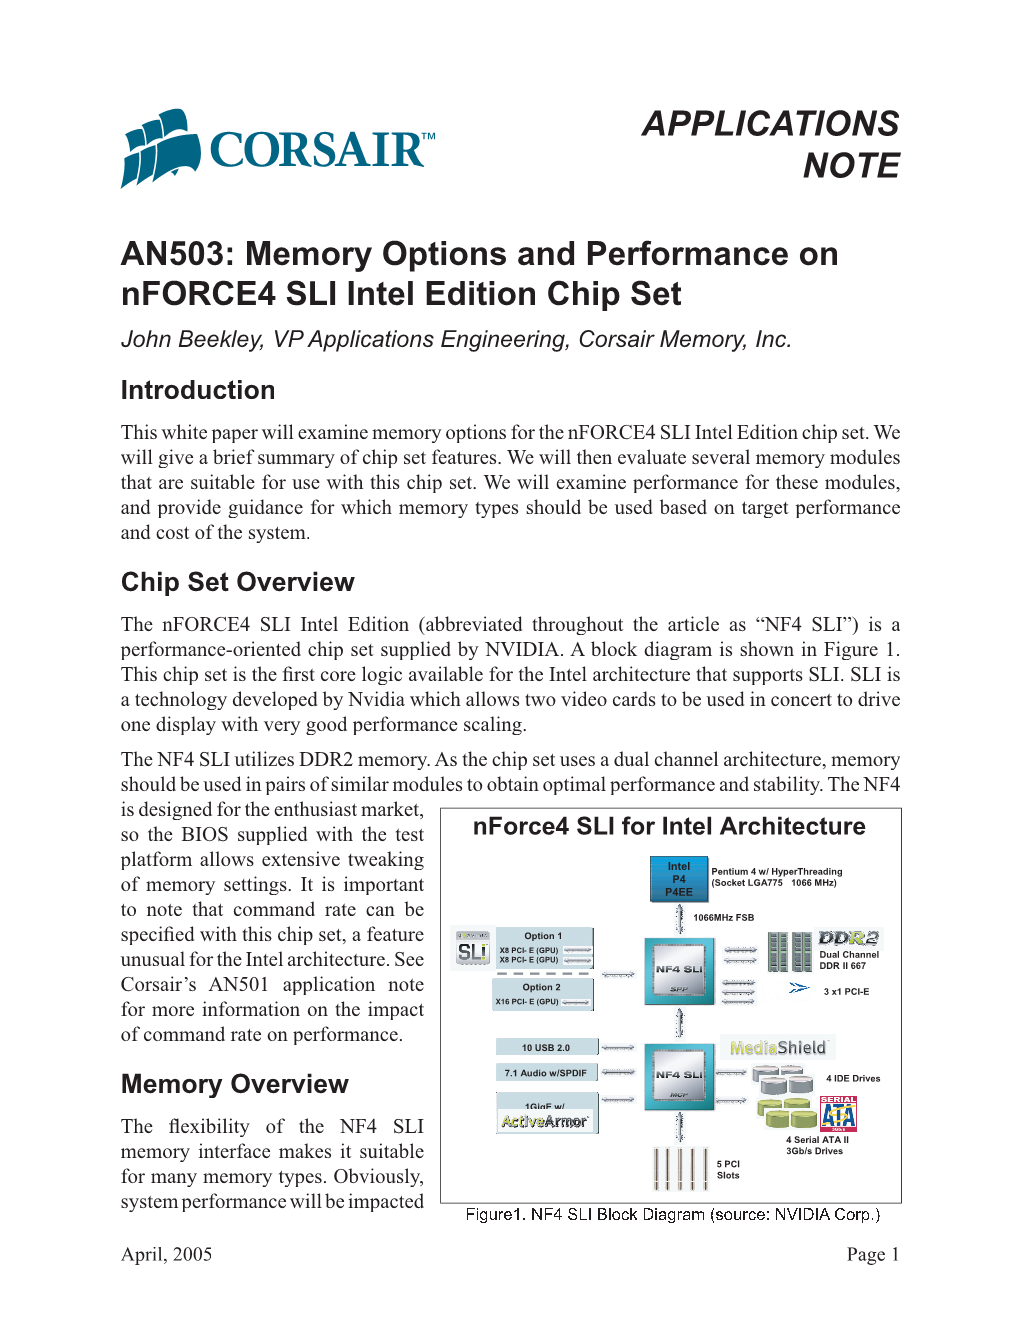 Memory Options and Performance on Nforce4 SLI Intel Edition Chip Set John Beekley, VP Applications Engineering, Corsair Memory, Inc